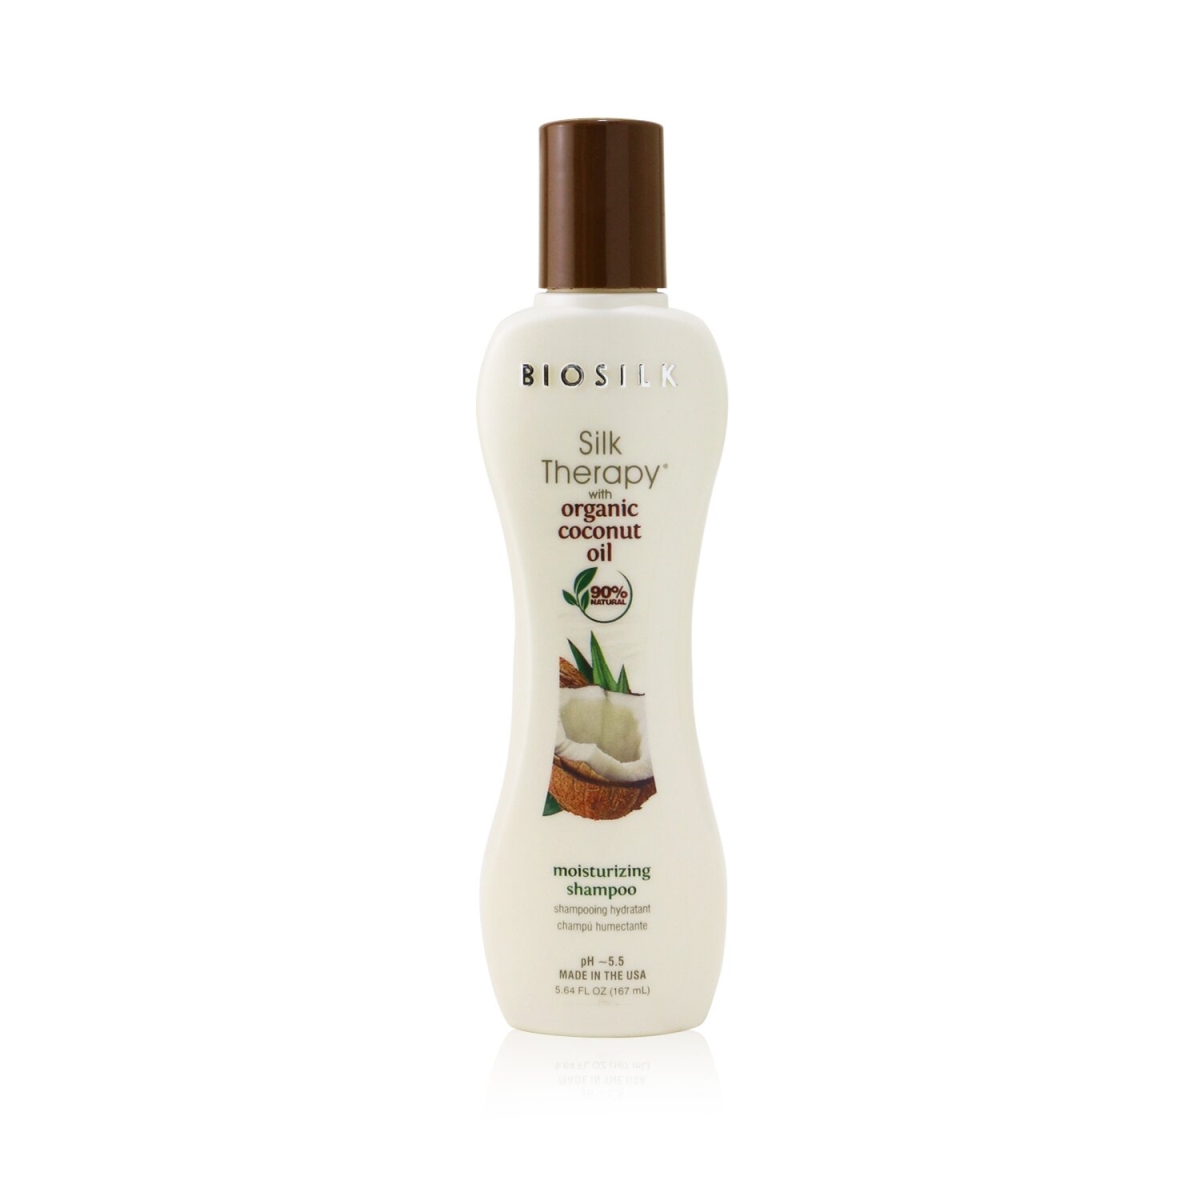 Picture of BioSilk 257370 5.64 oz Silk Therapy with Coconut Oil Moisturizing Shampoo